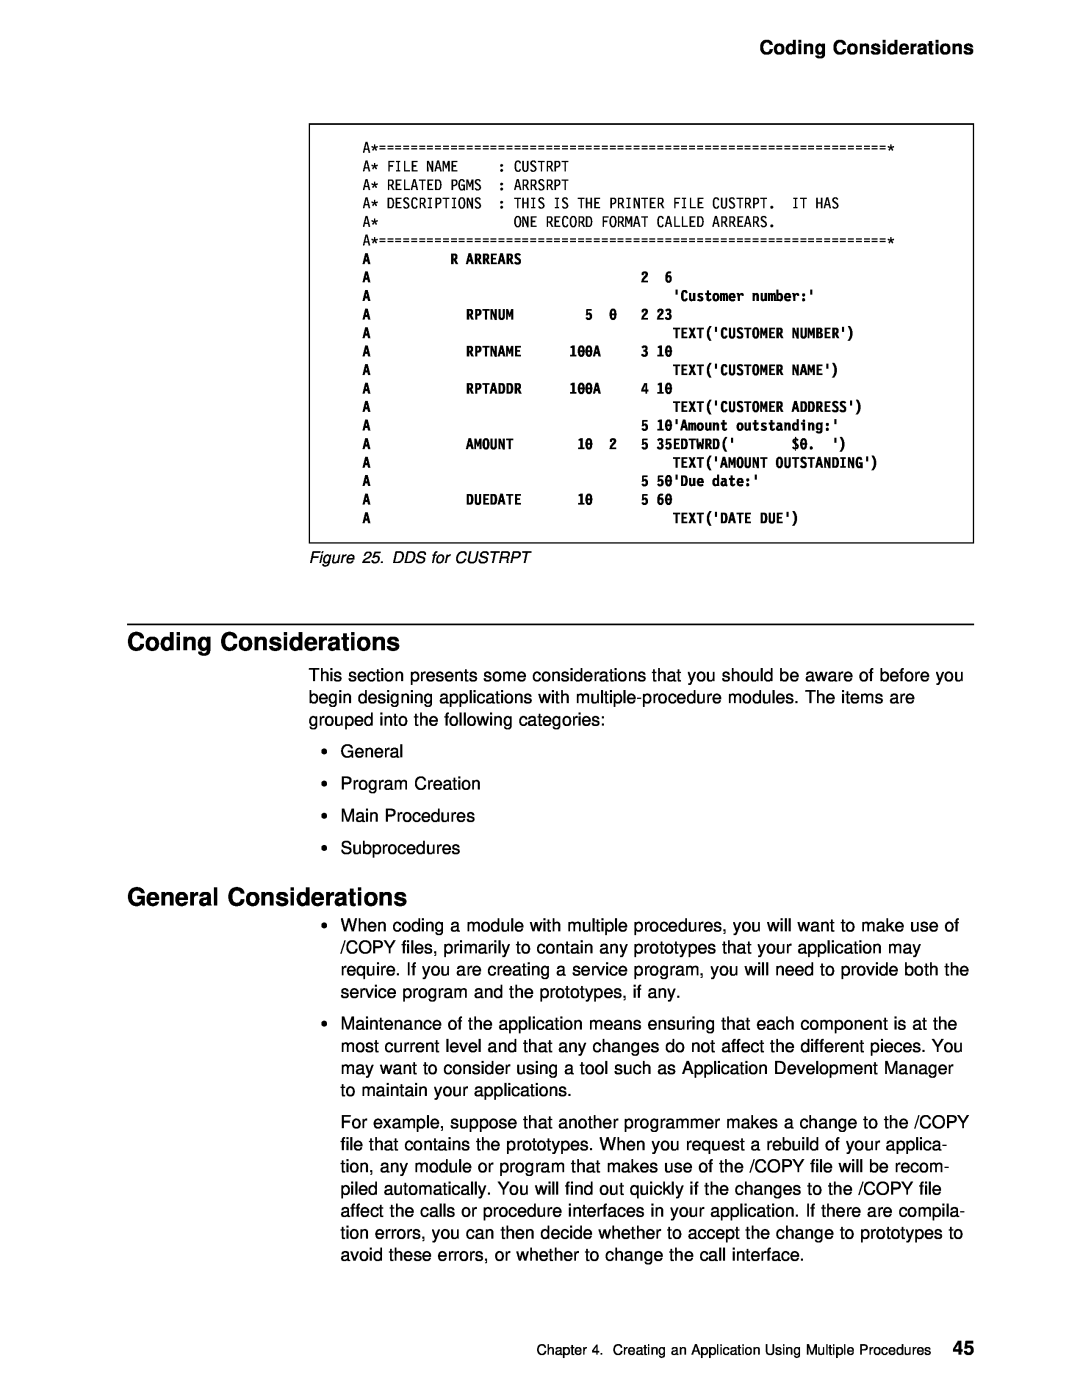 IBM AS/400 manual Coding Considerations, General Considerations 